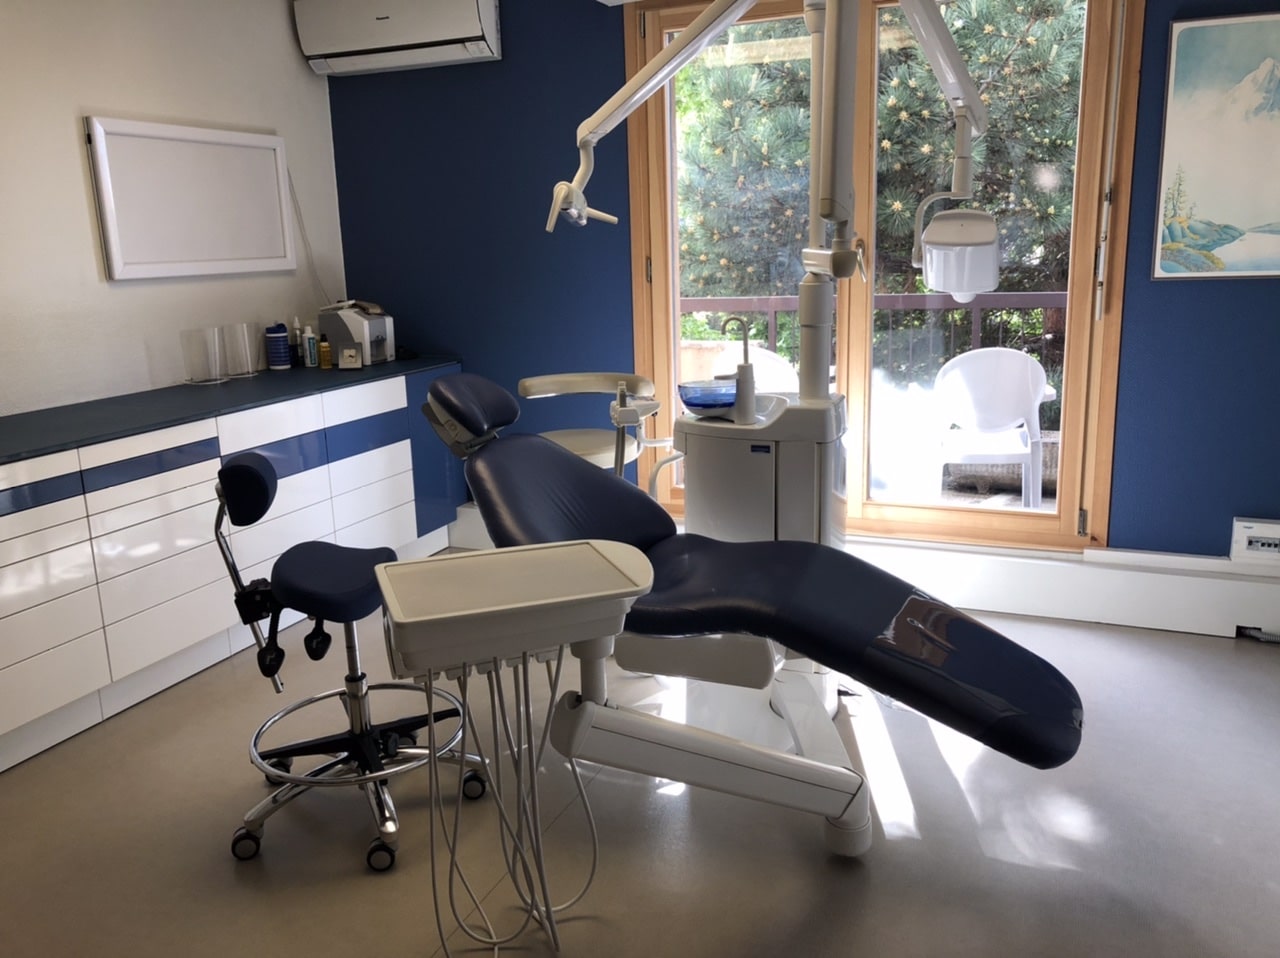 Centre dentaire : peuvent-ils opérer ?